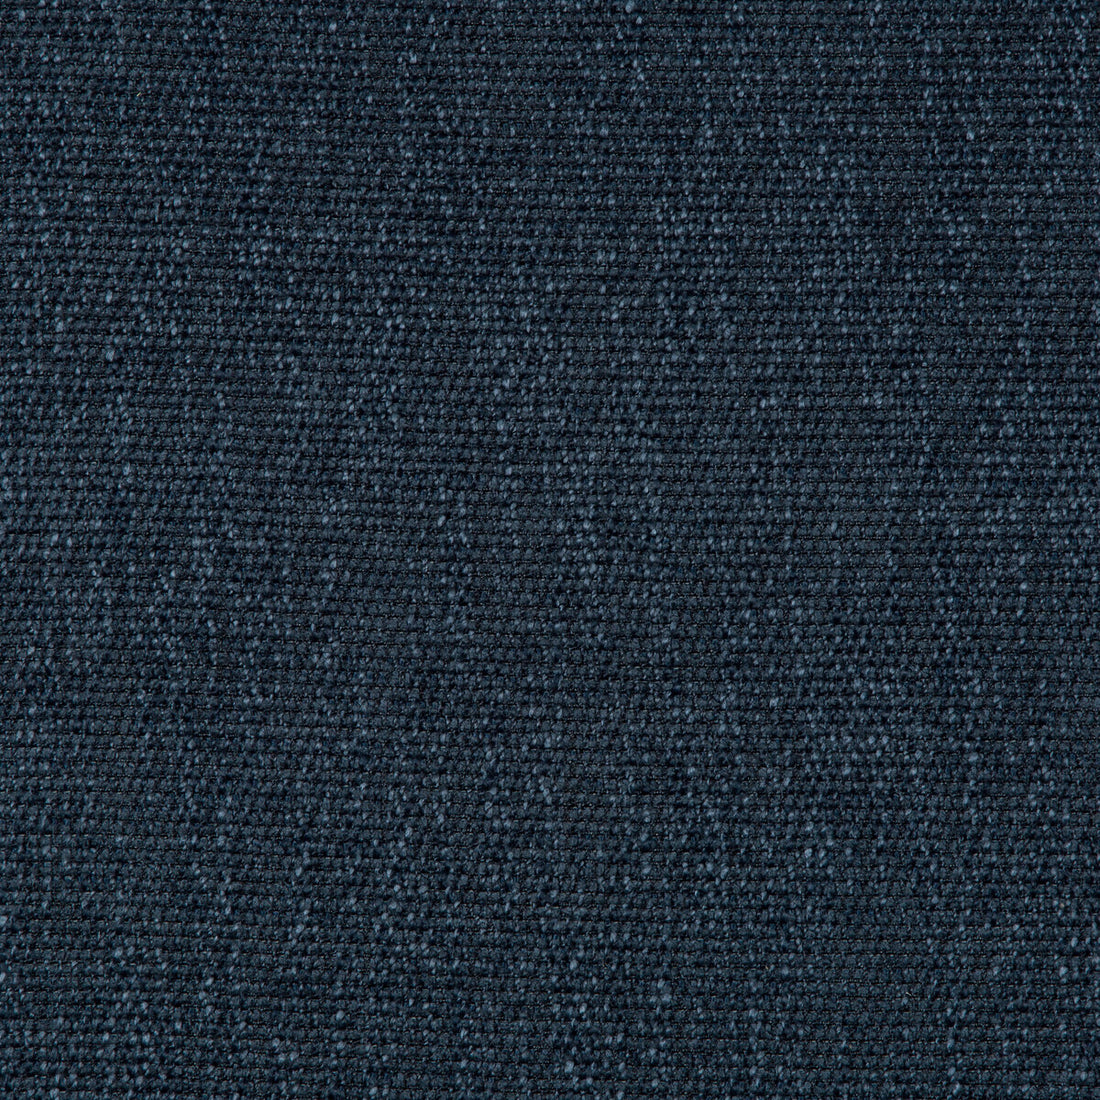 Kravet Smart fabric in 35943-50 color - pattern 35943.50.0 - by Kravet Smart in the Performance Kravetarmor collection